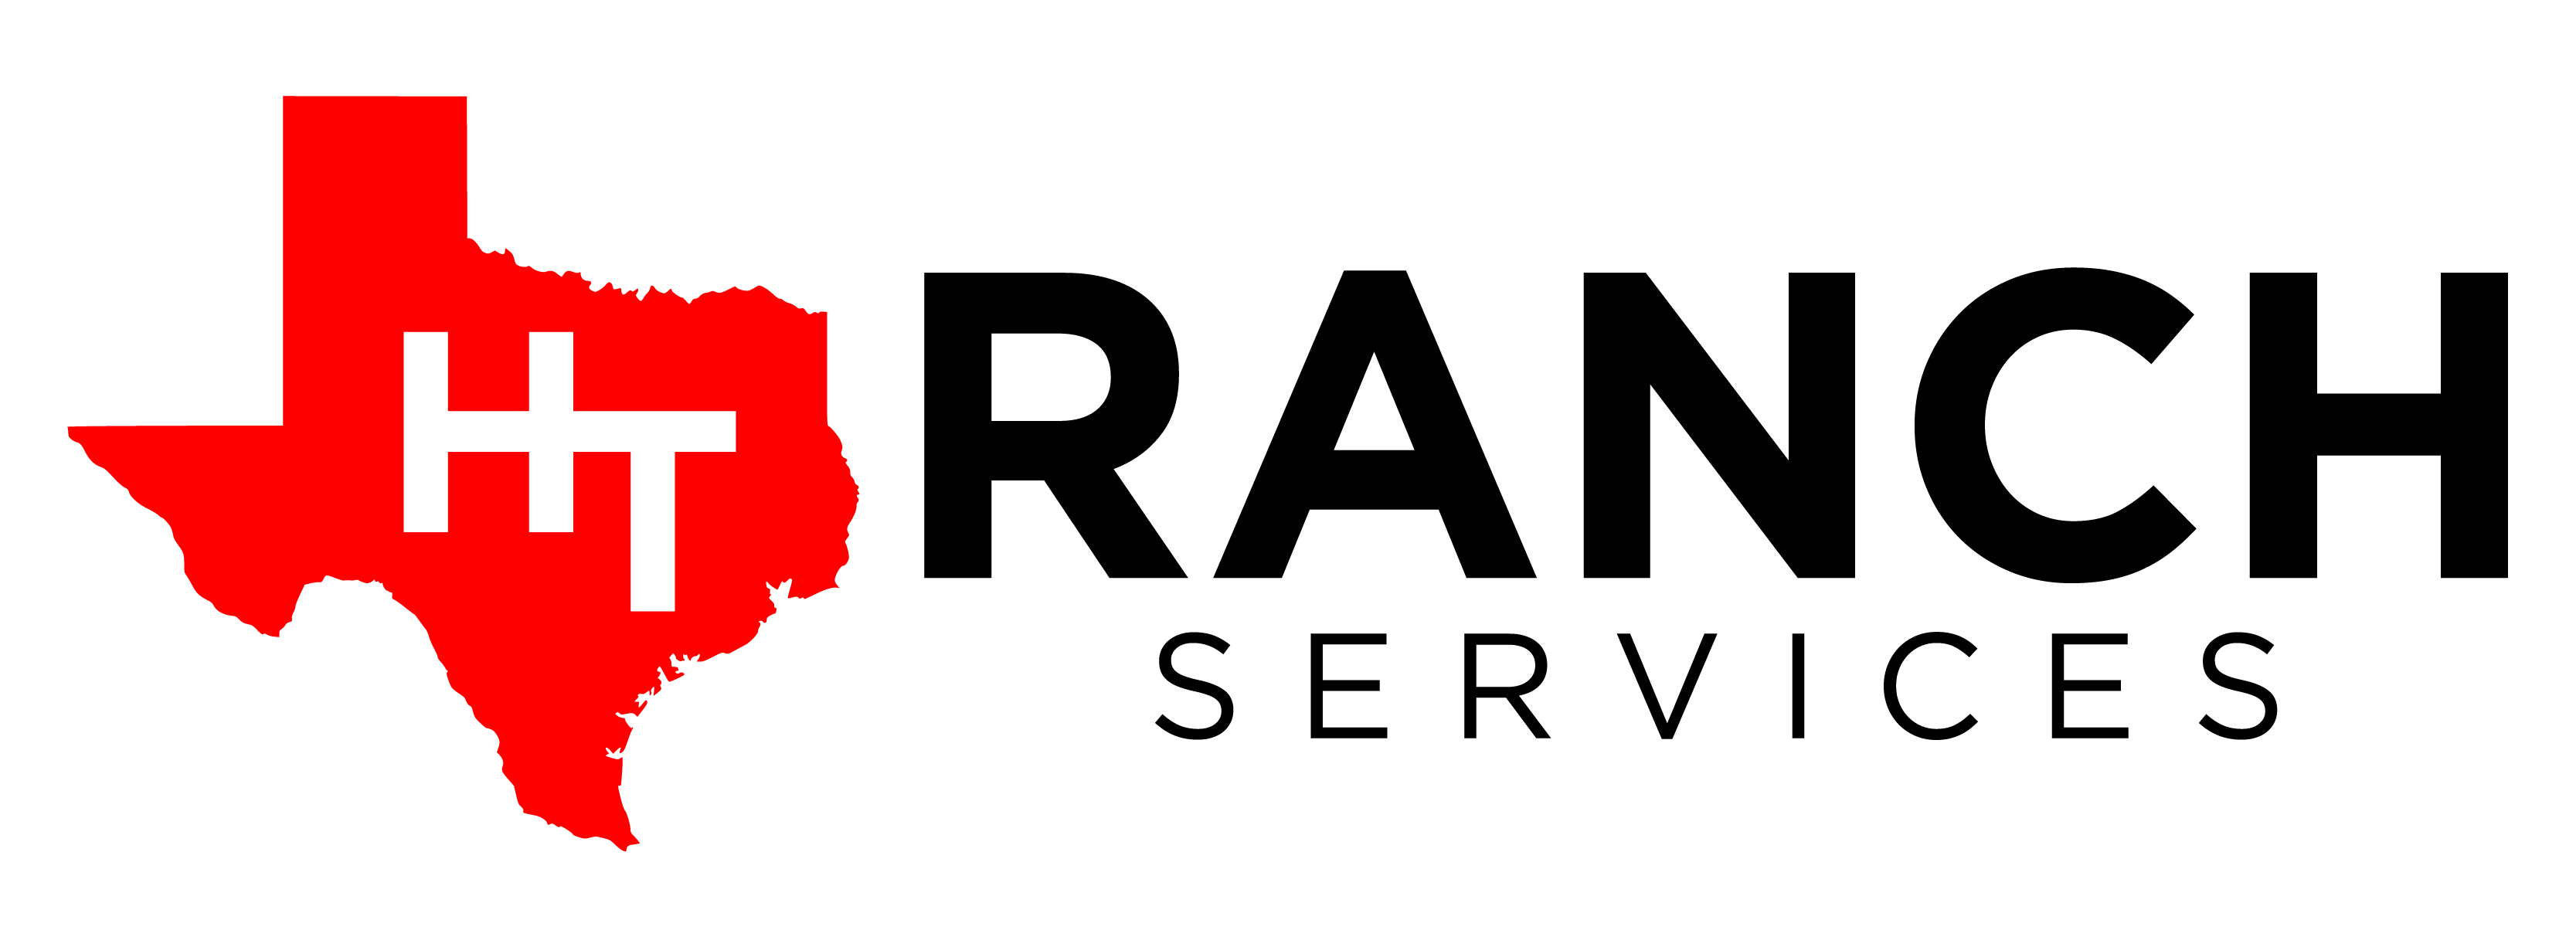 H&T Ranch Services, LLC Logo